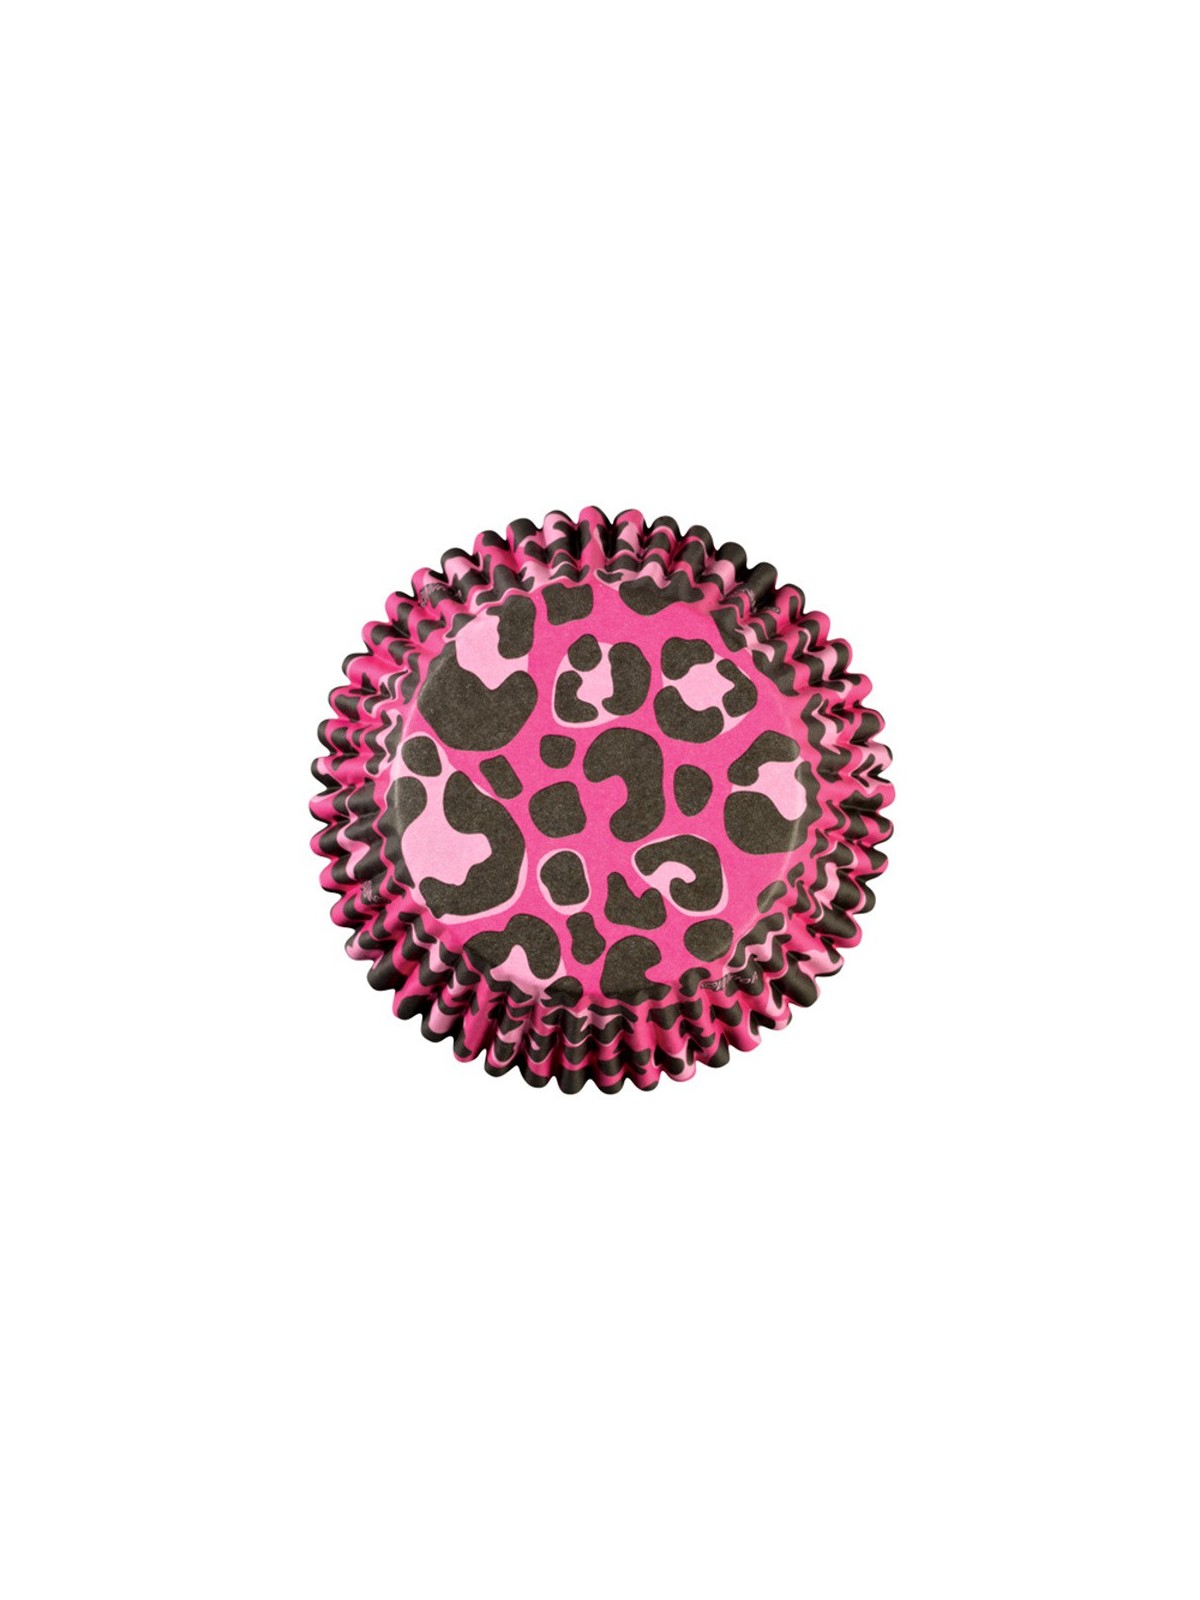 Wilton Baking Cups - Chevron Pink Leopard 36stück